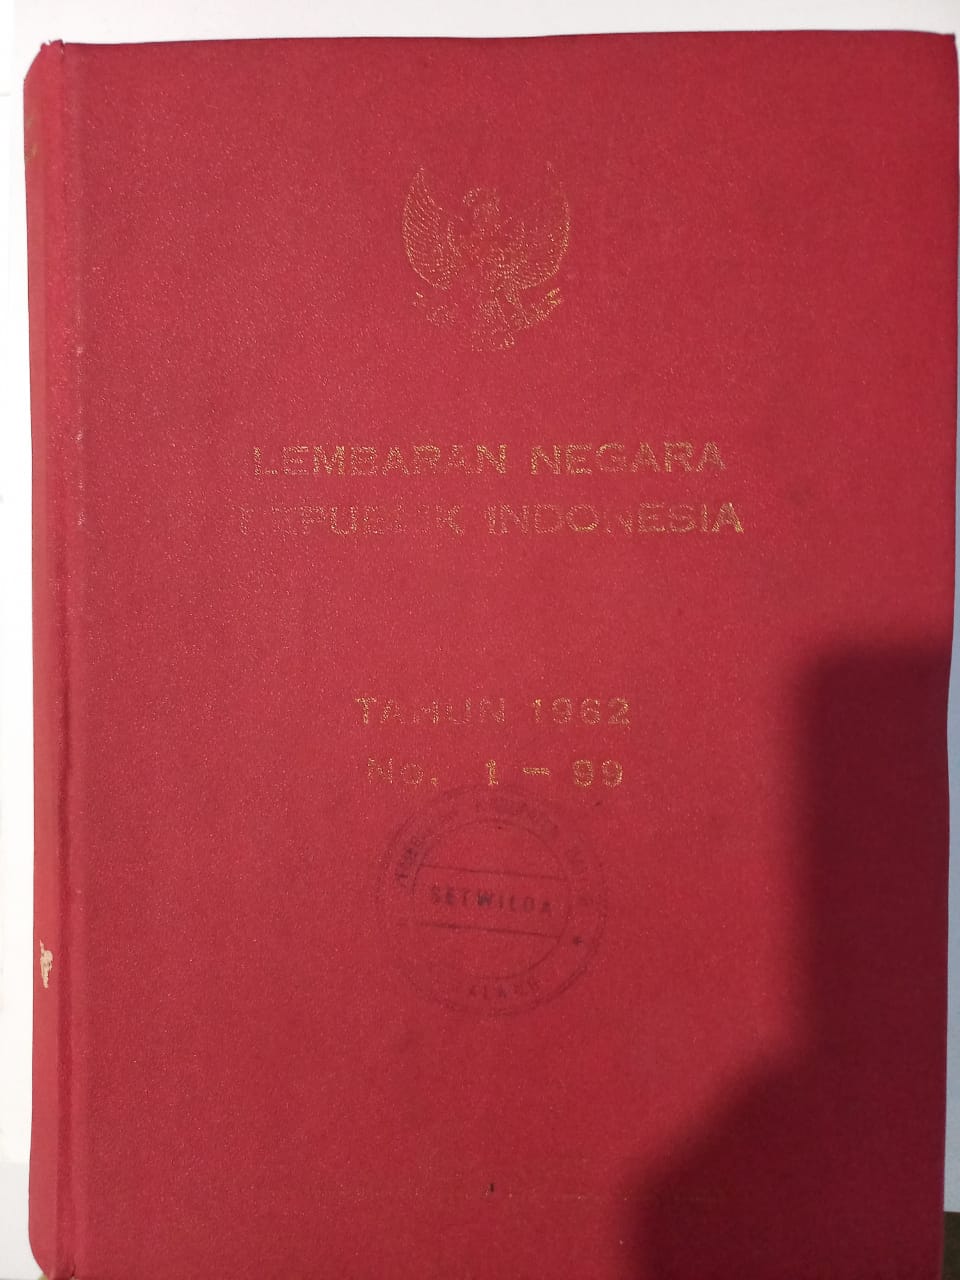 LEMBARAN NEGARA REPUBLIK INDONESIA TAHUN 1962 NO. 1- 99